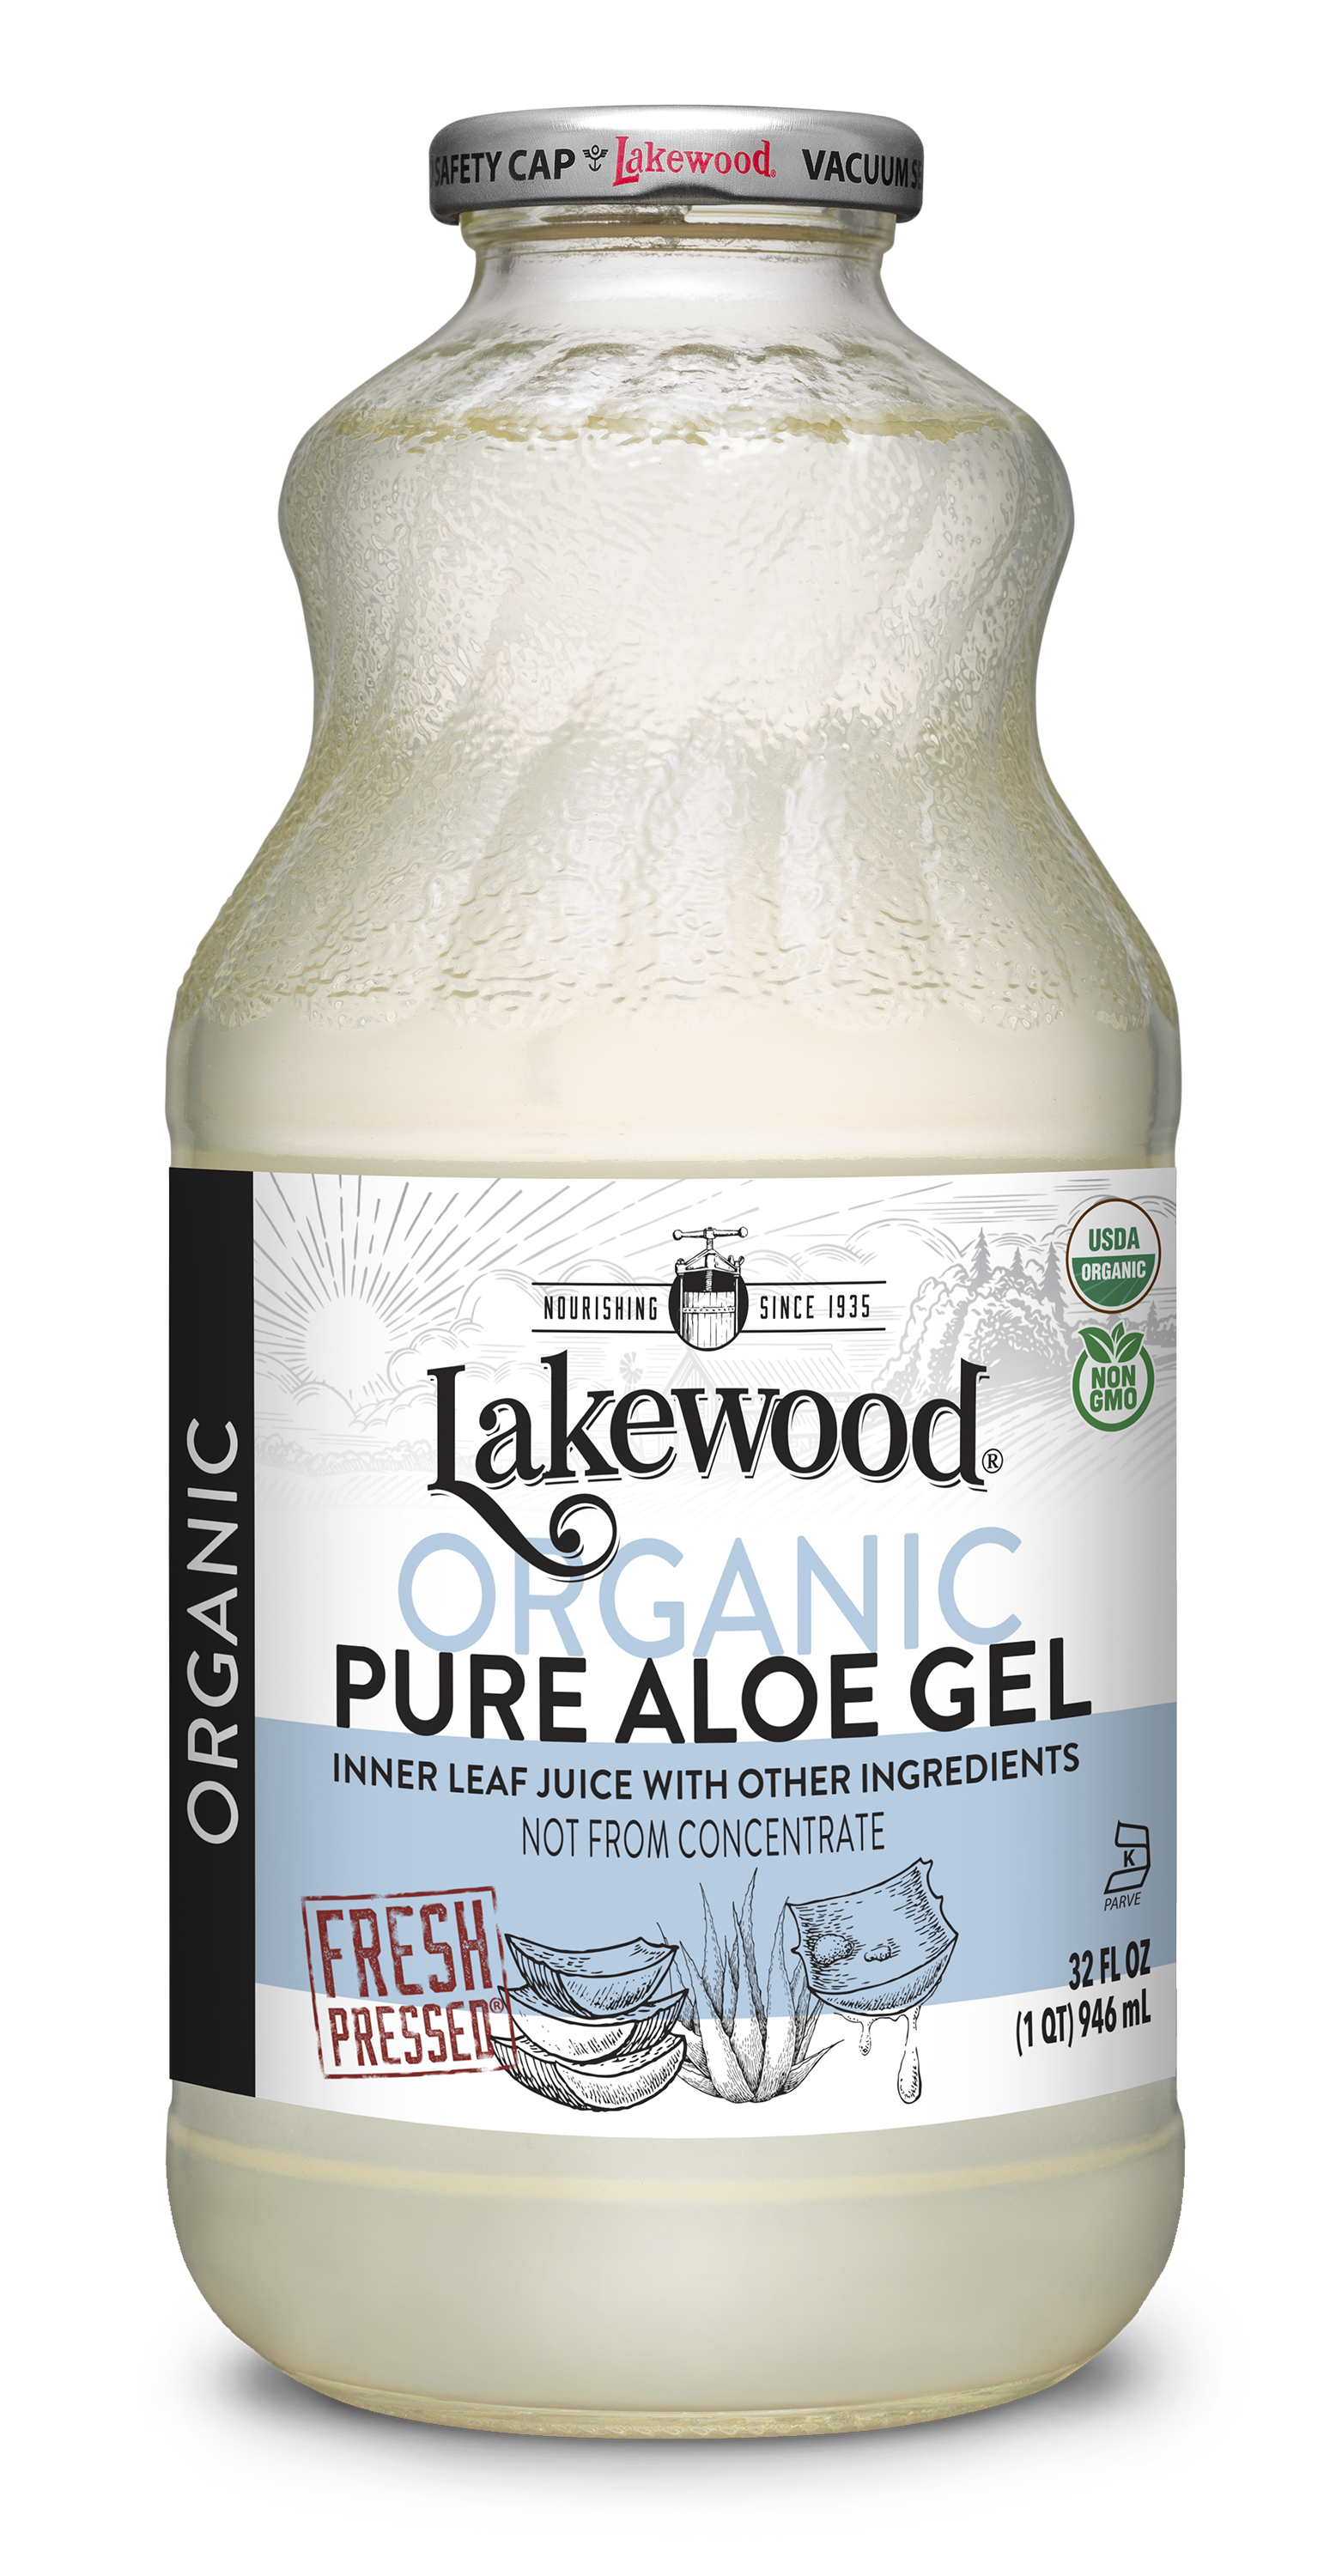 lakewood-organic-pure-aloe-gel-fresh-pressed